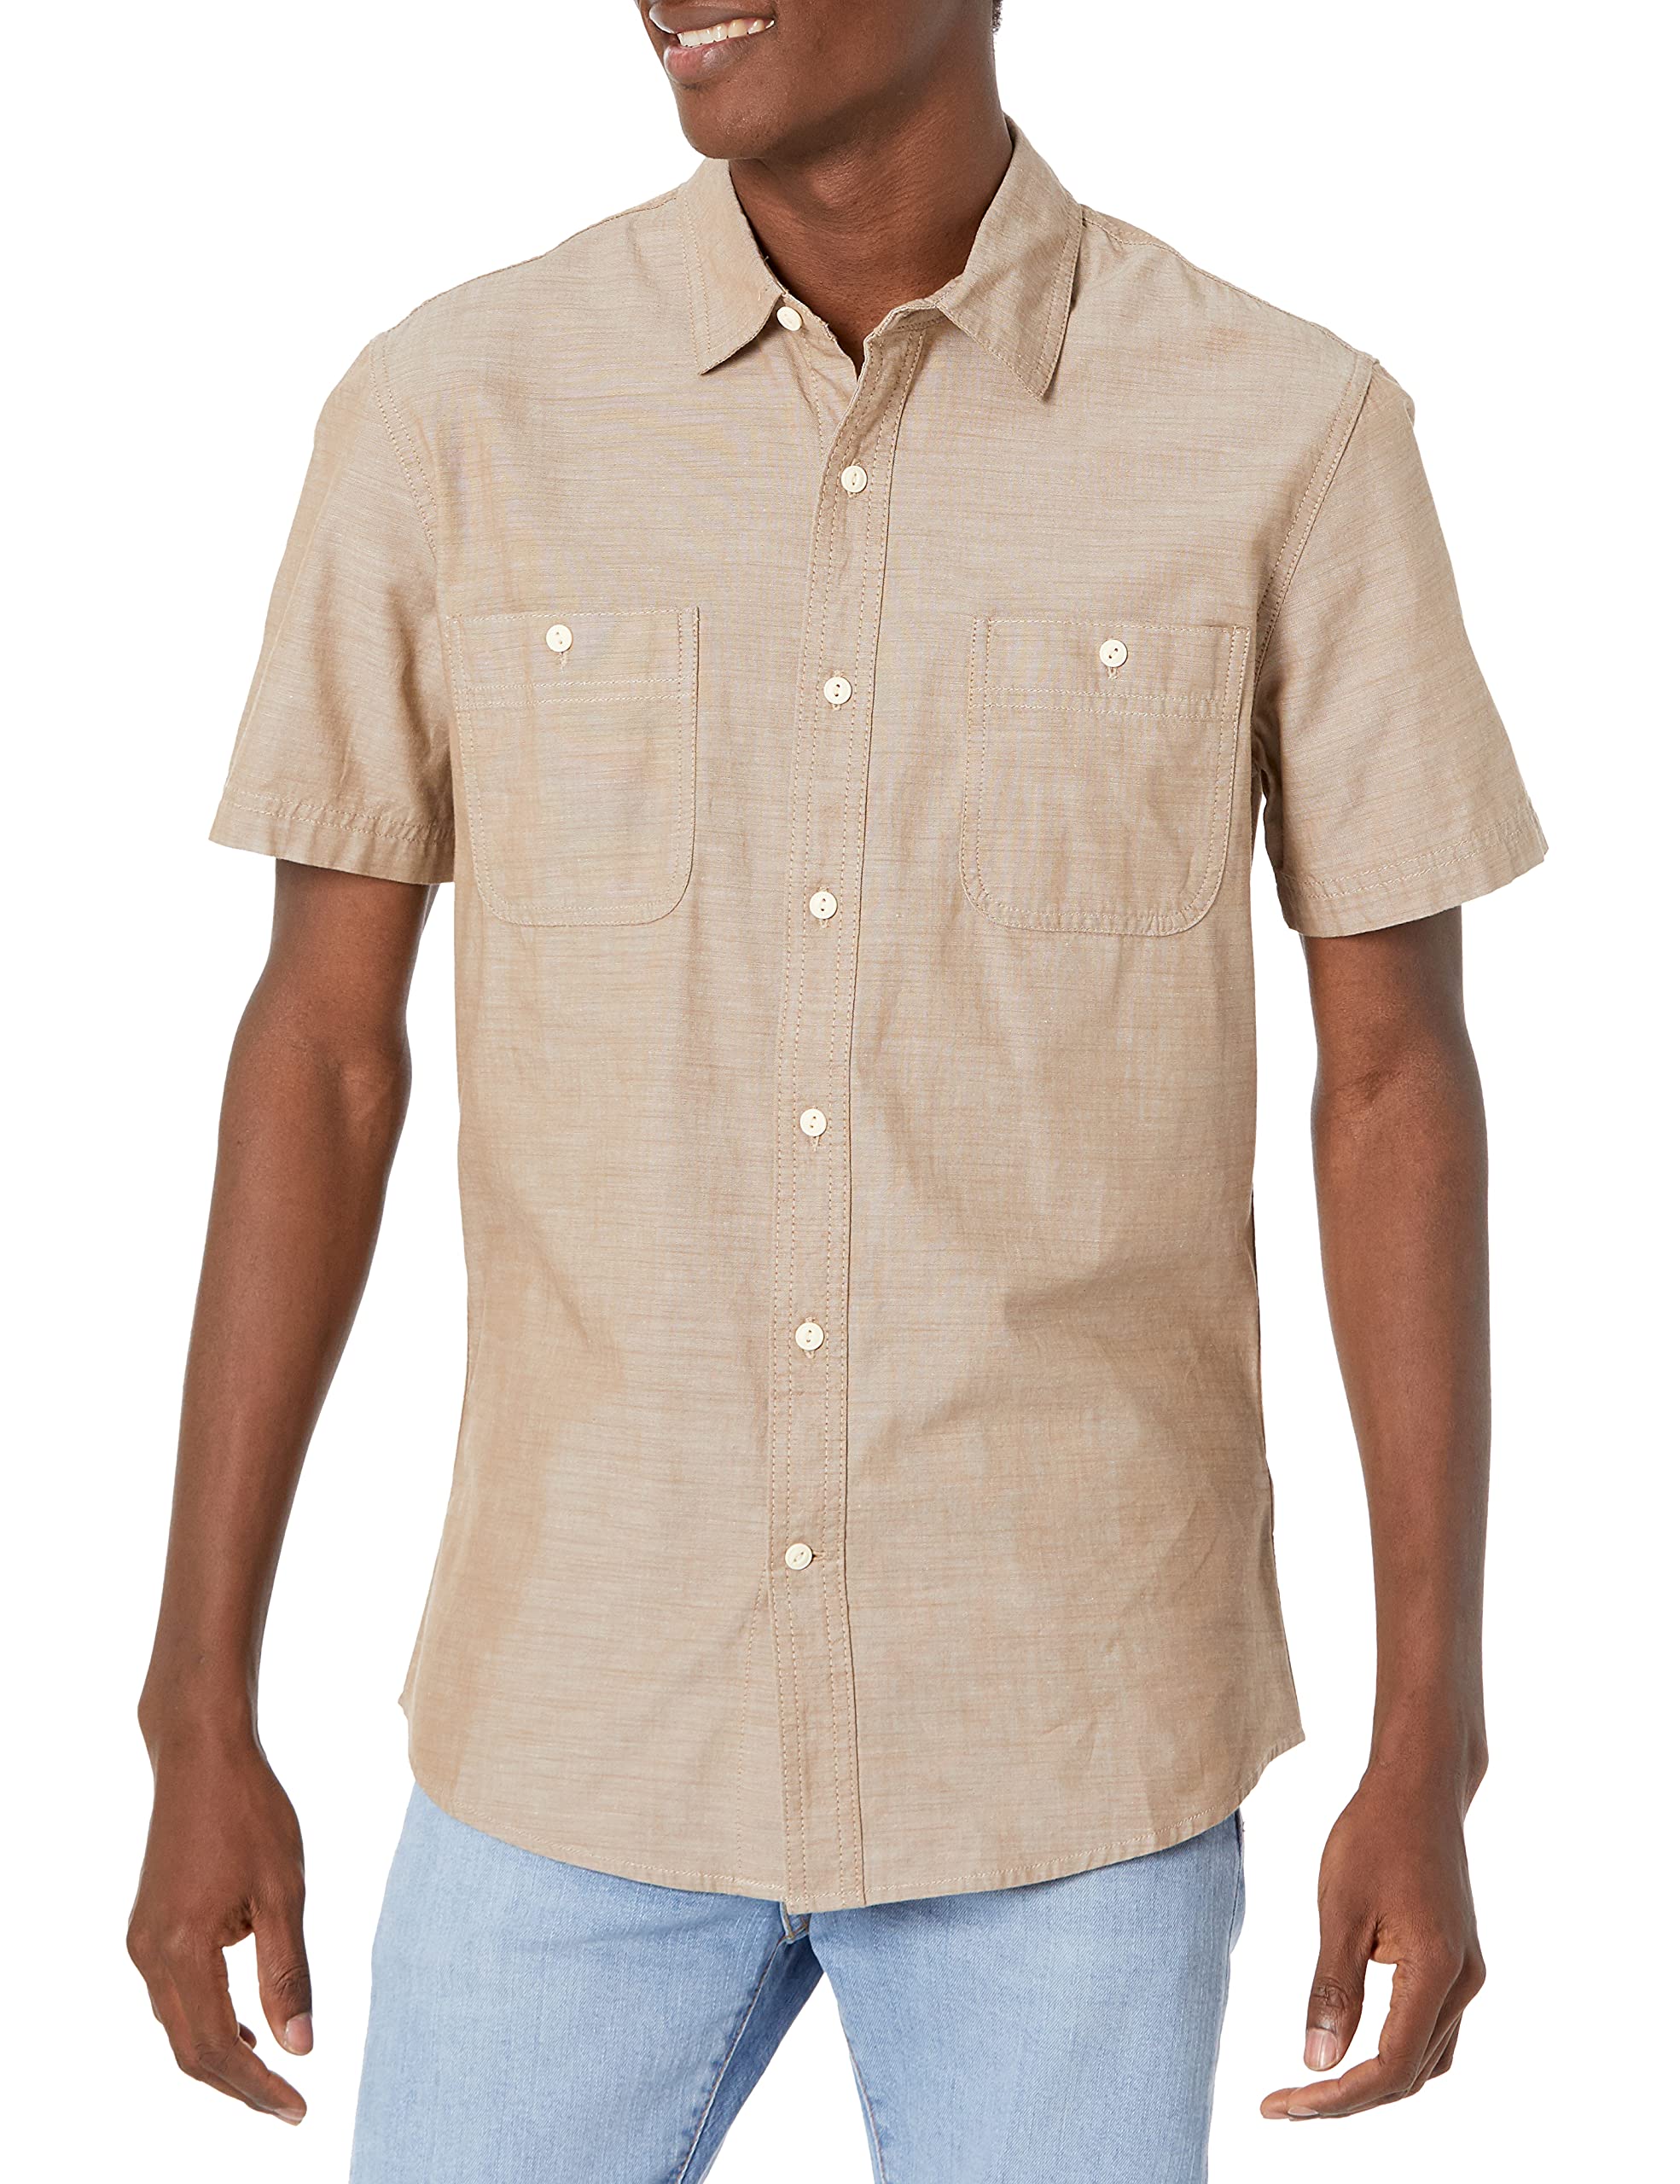 Amazon Essentials Men's Short-Sleeve Chambray Shirt - $5.90